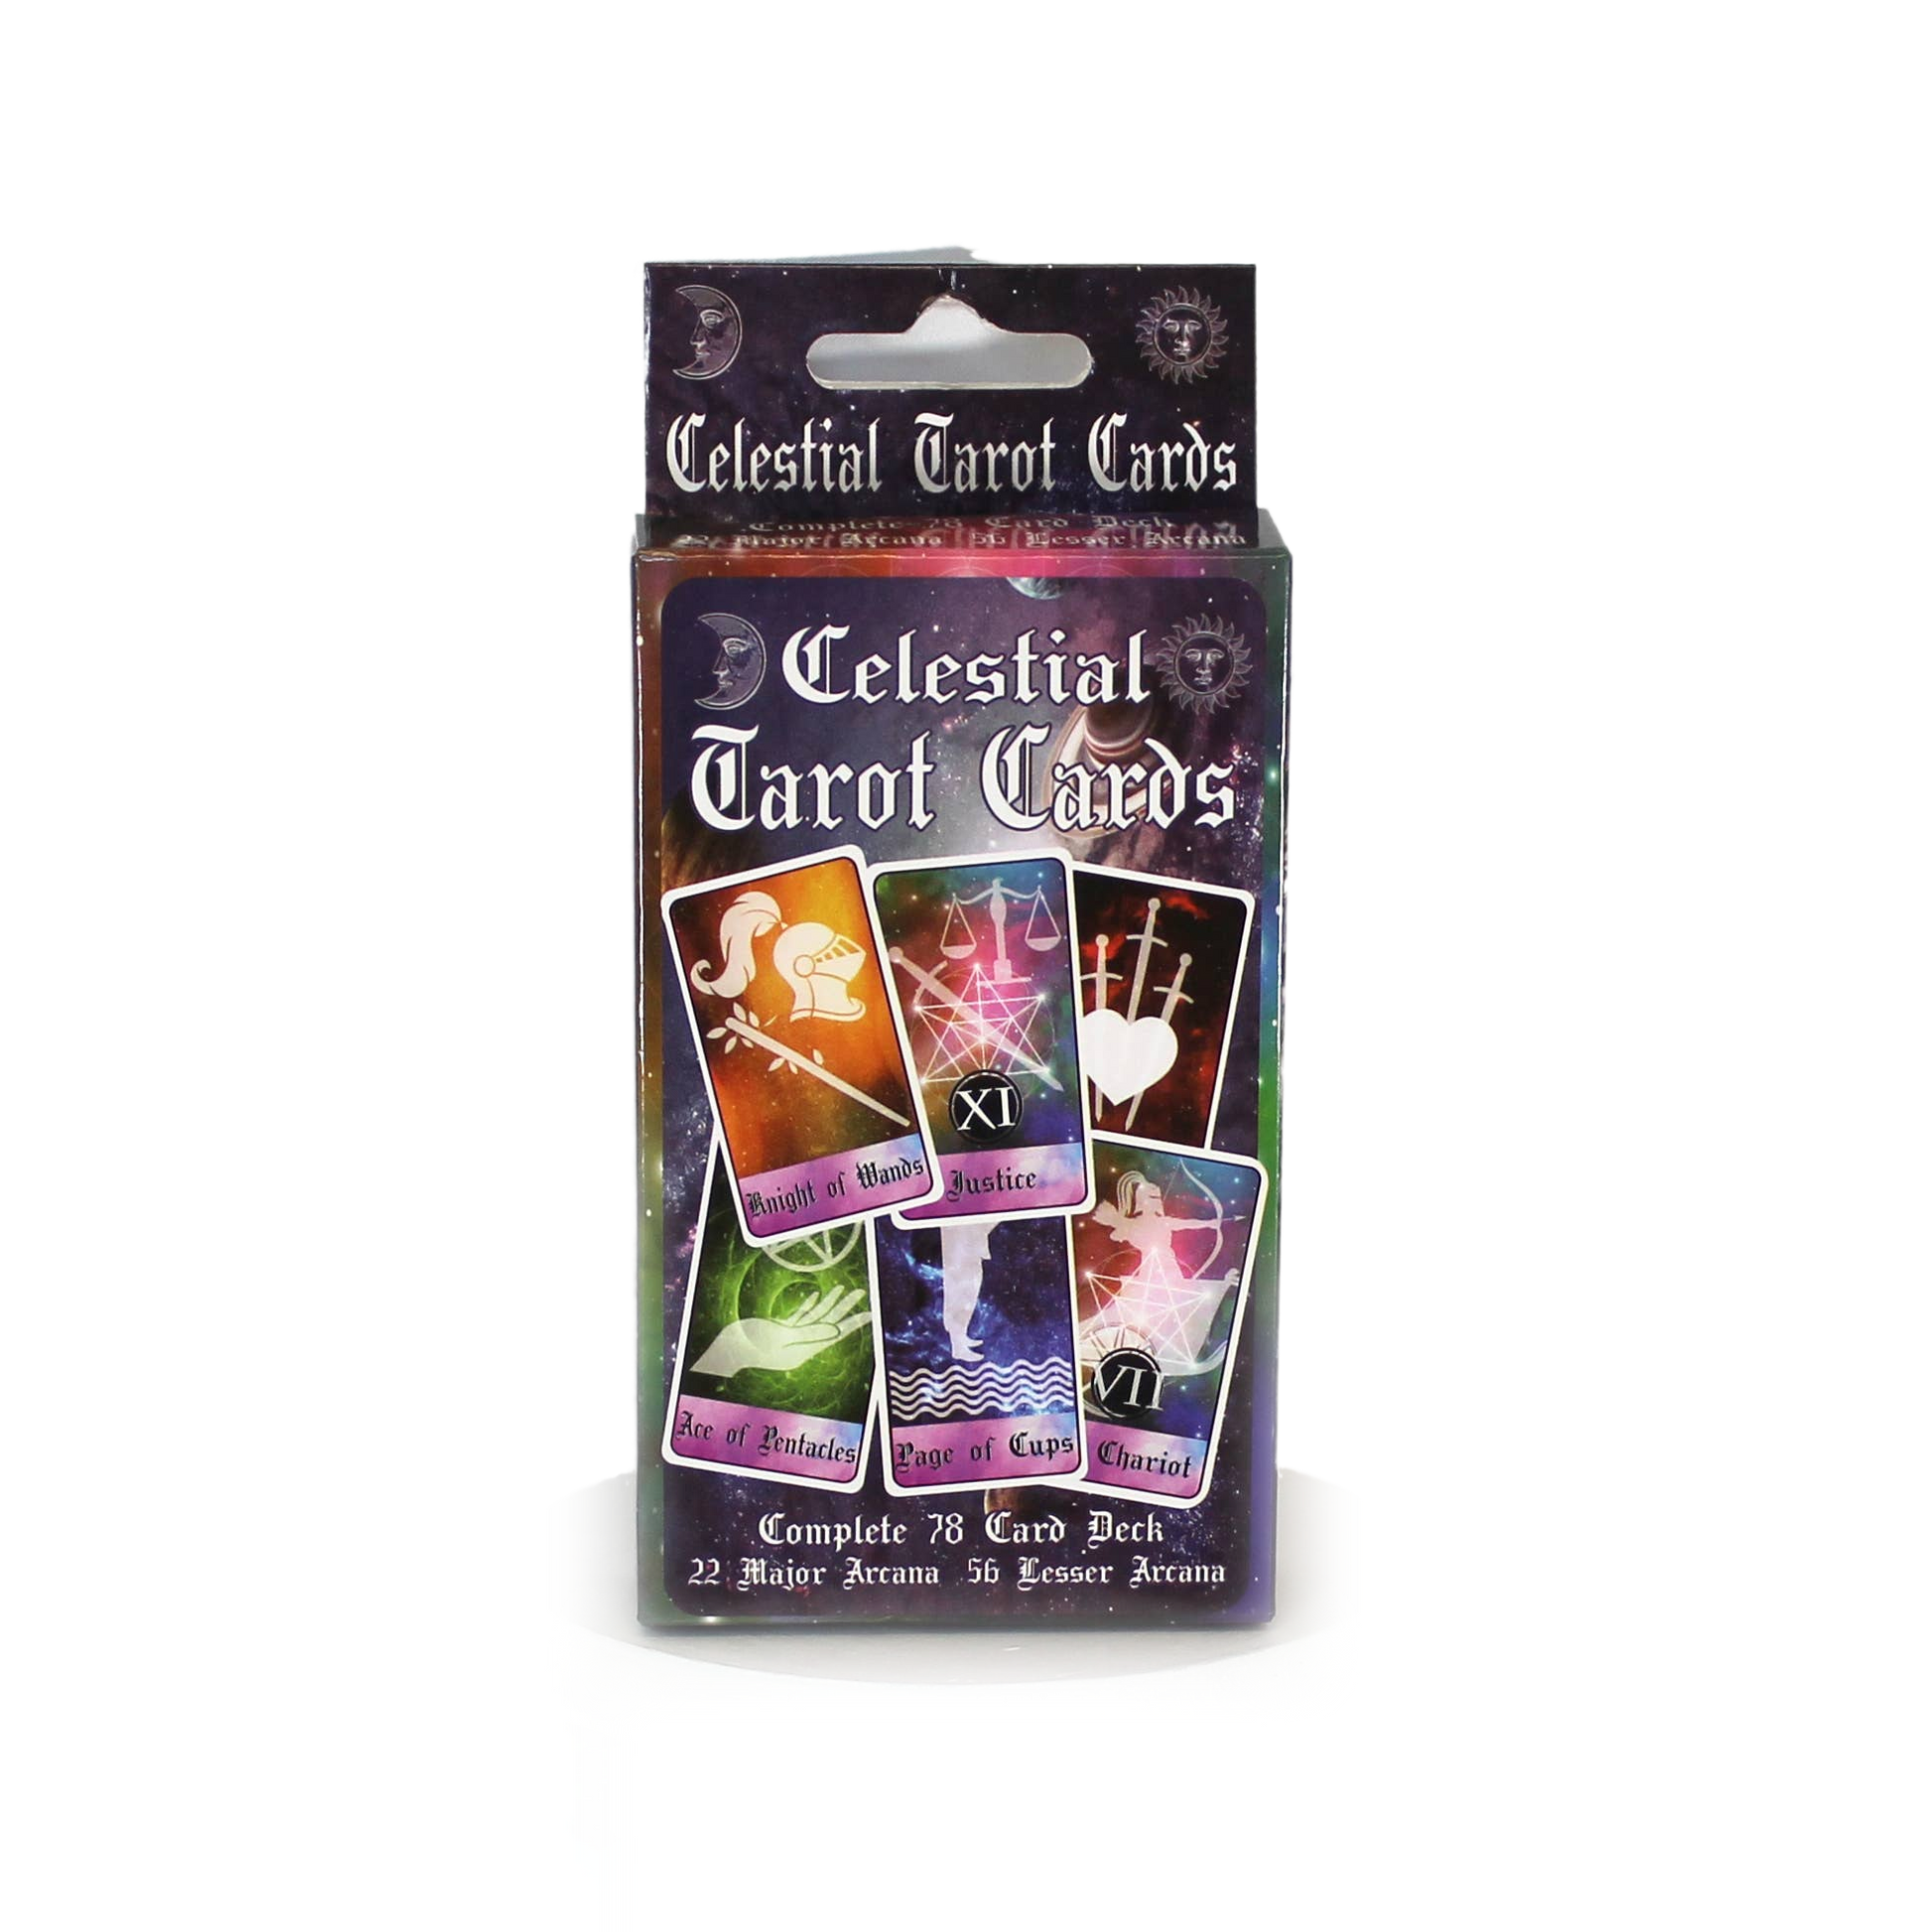 Celestial Tarot Cards box